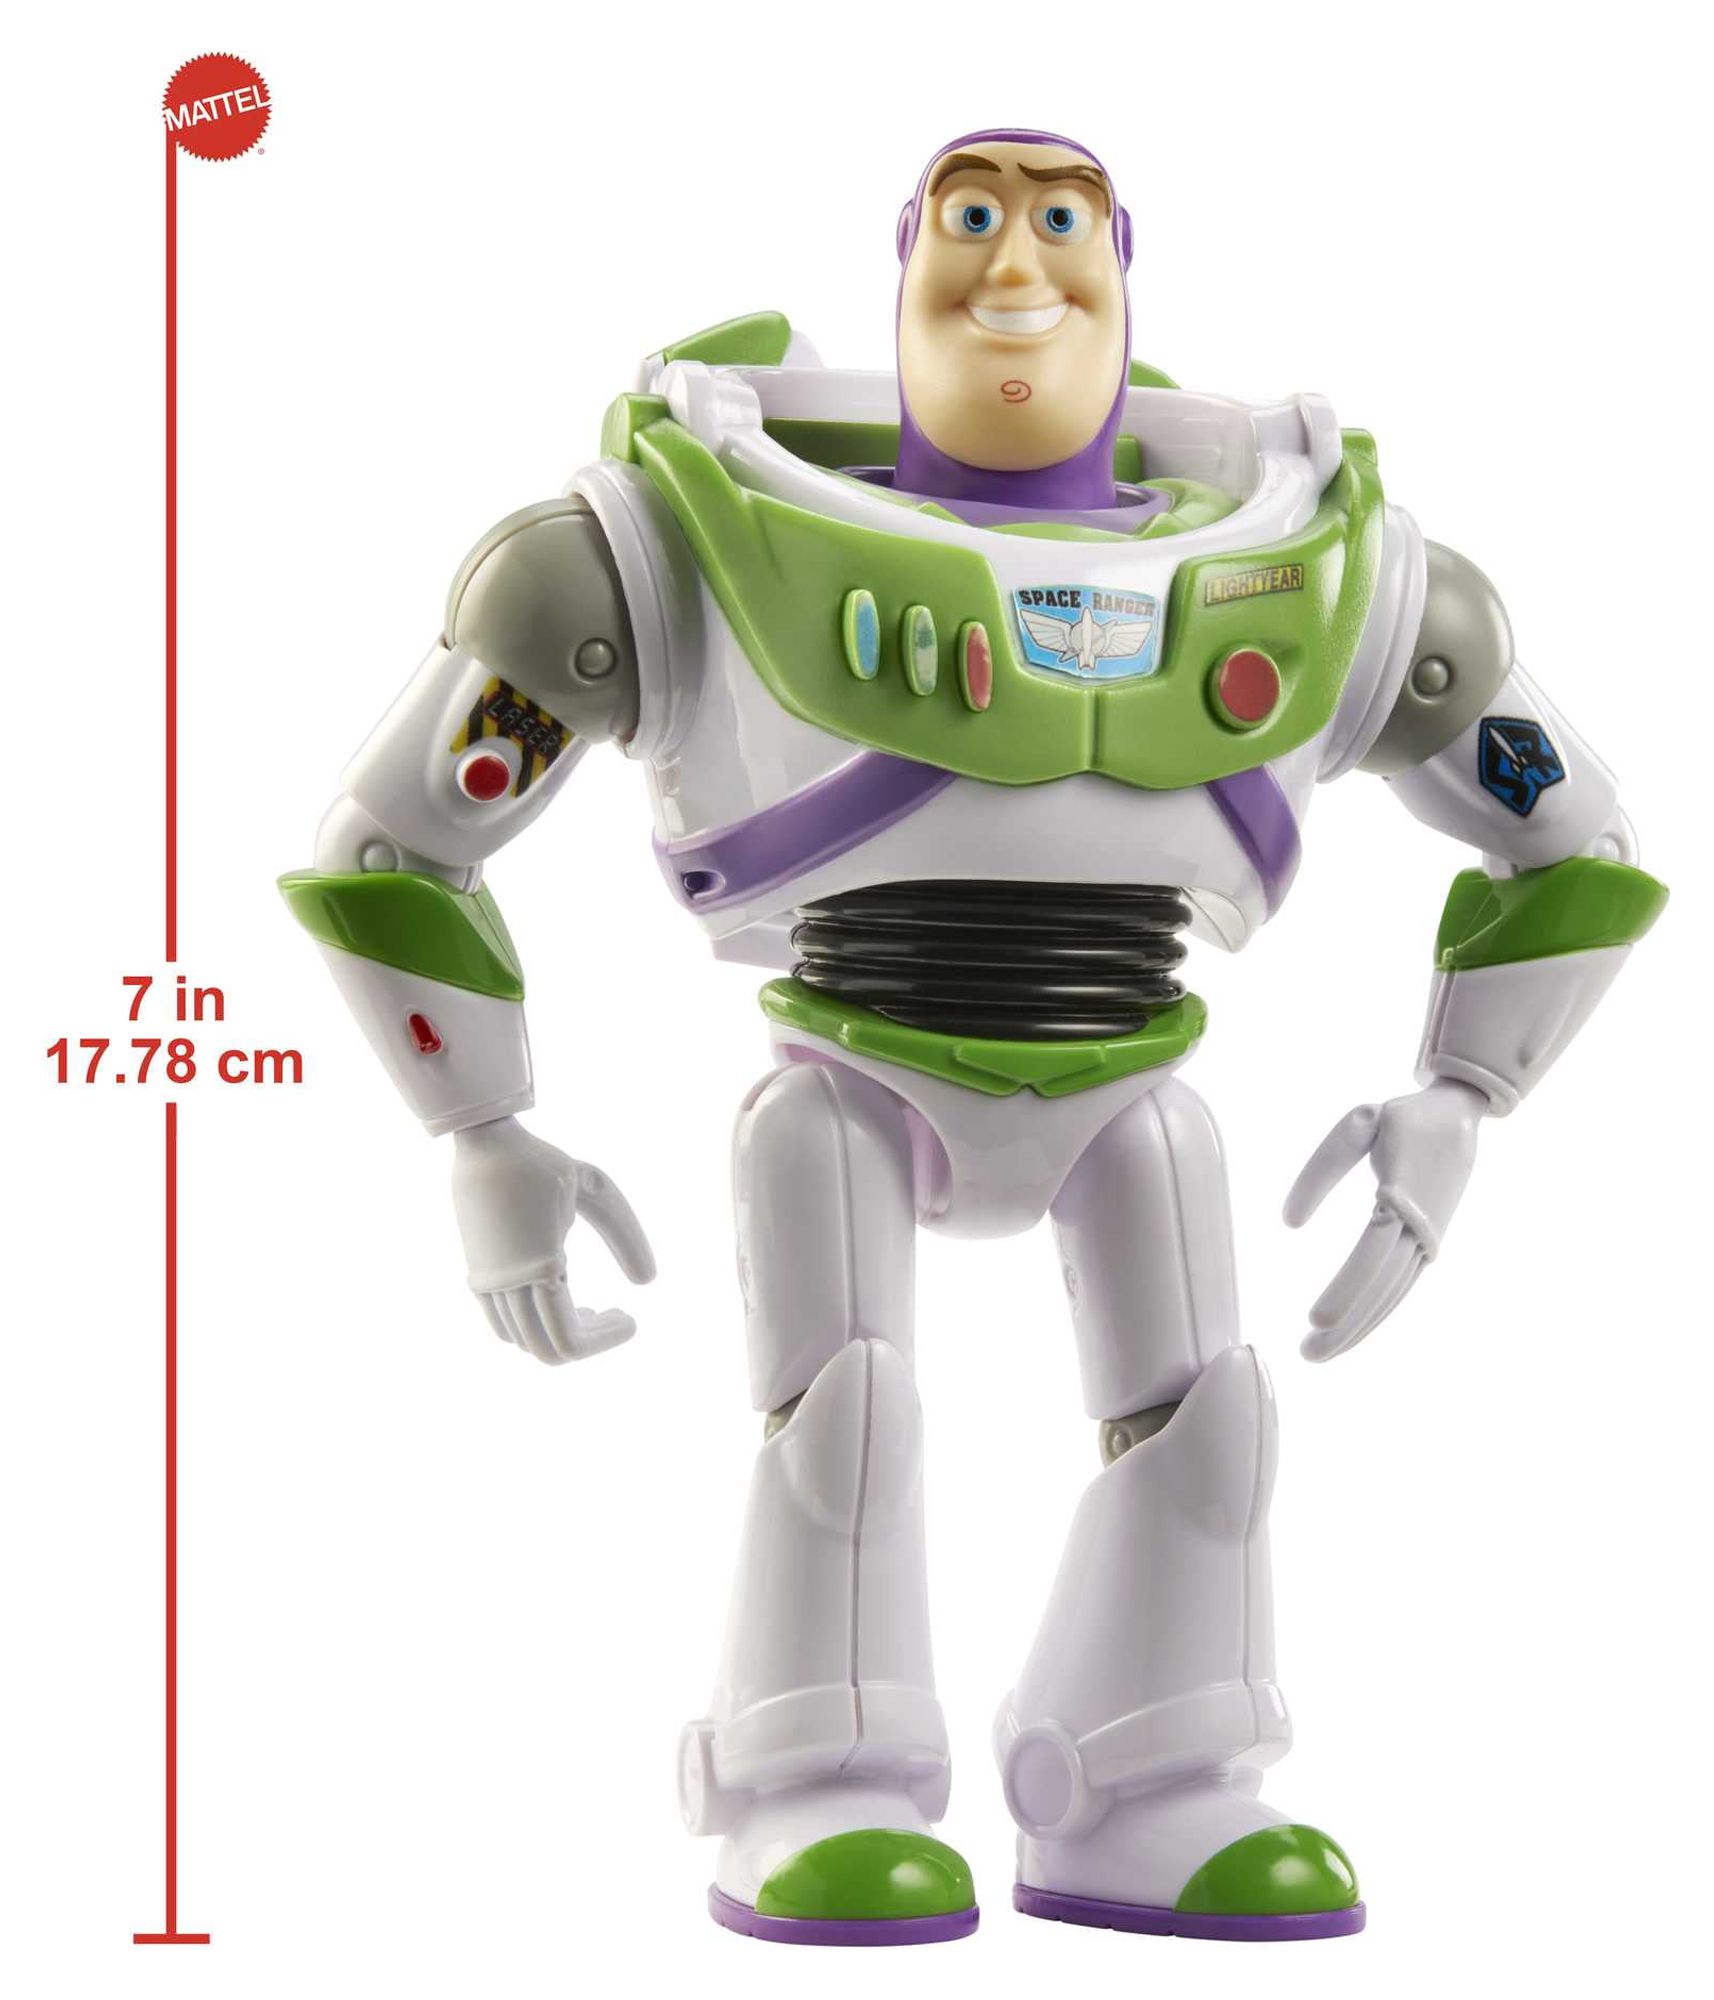 Disney Pixar Toy Story Buzz Lightyear Action Figure - image 3 of 6